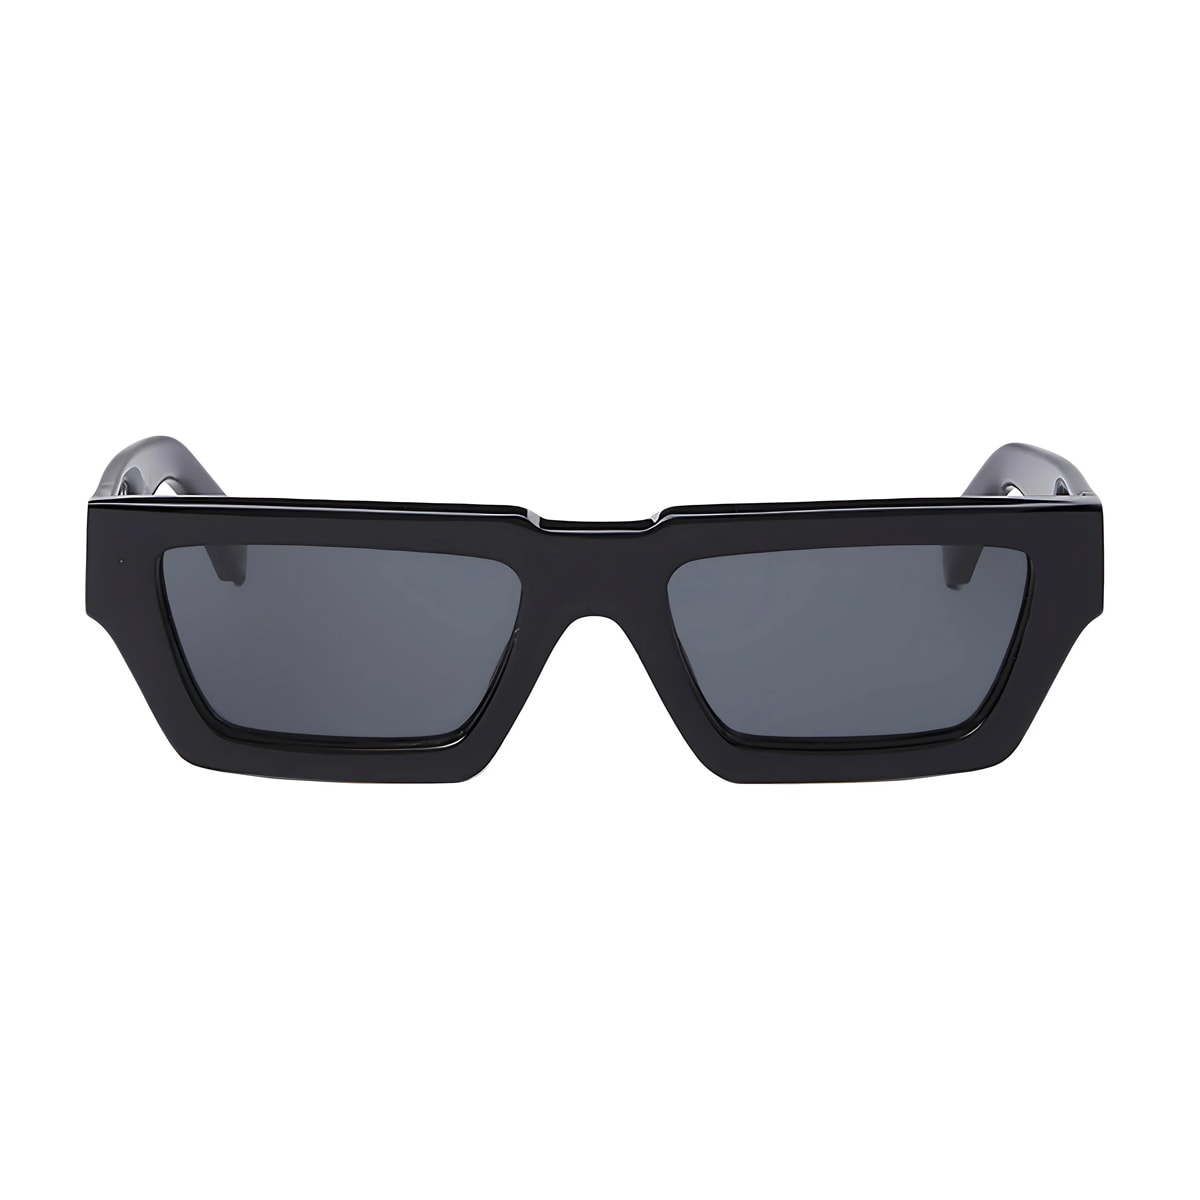 Oeri129 Manchester 1007 Black Sunglasses